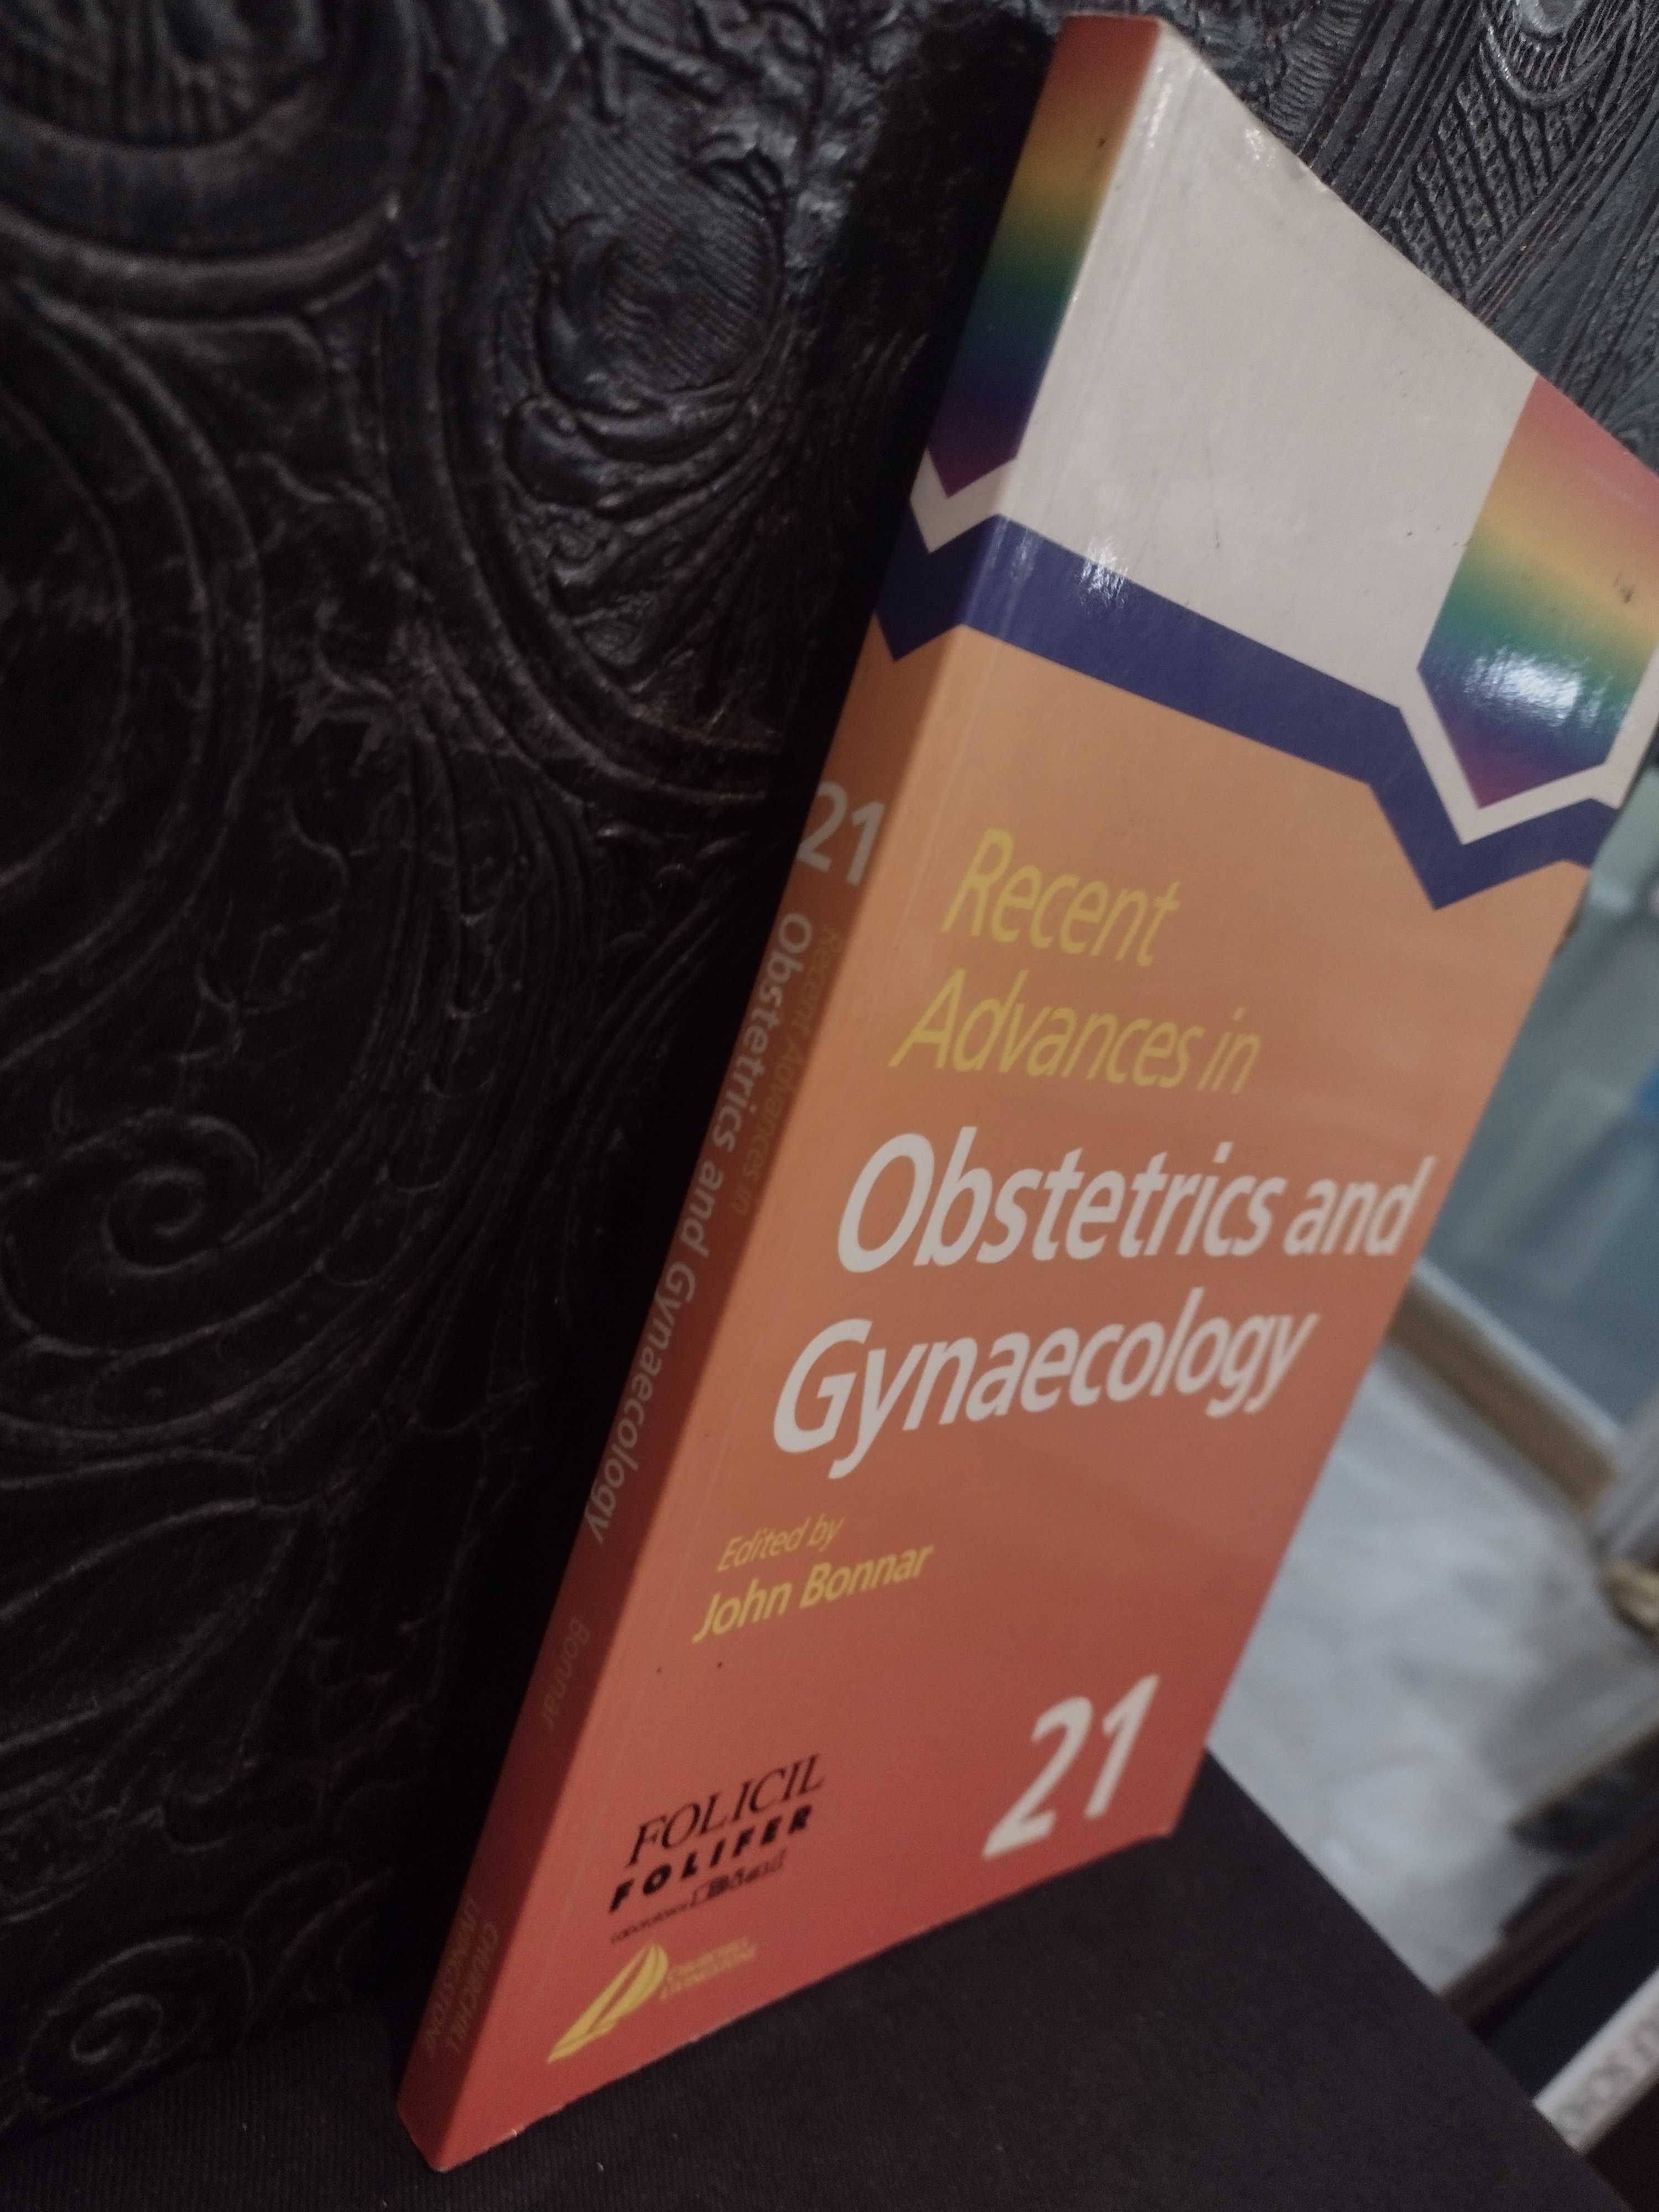 Recent Advances in Obstetrics and Gynaecology - John Bonnar